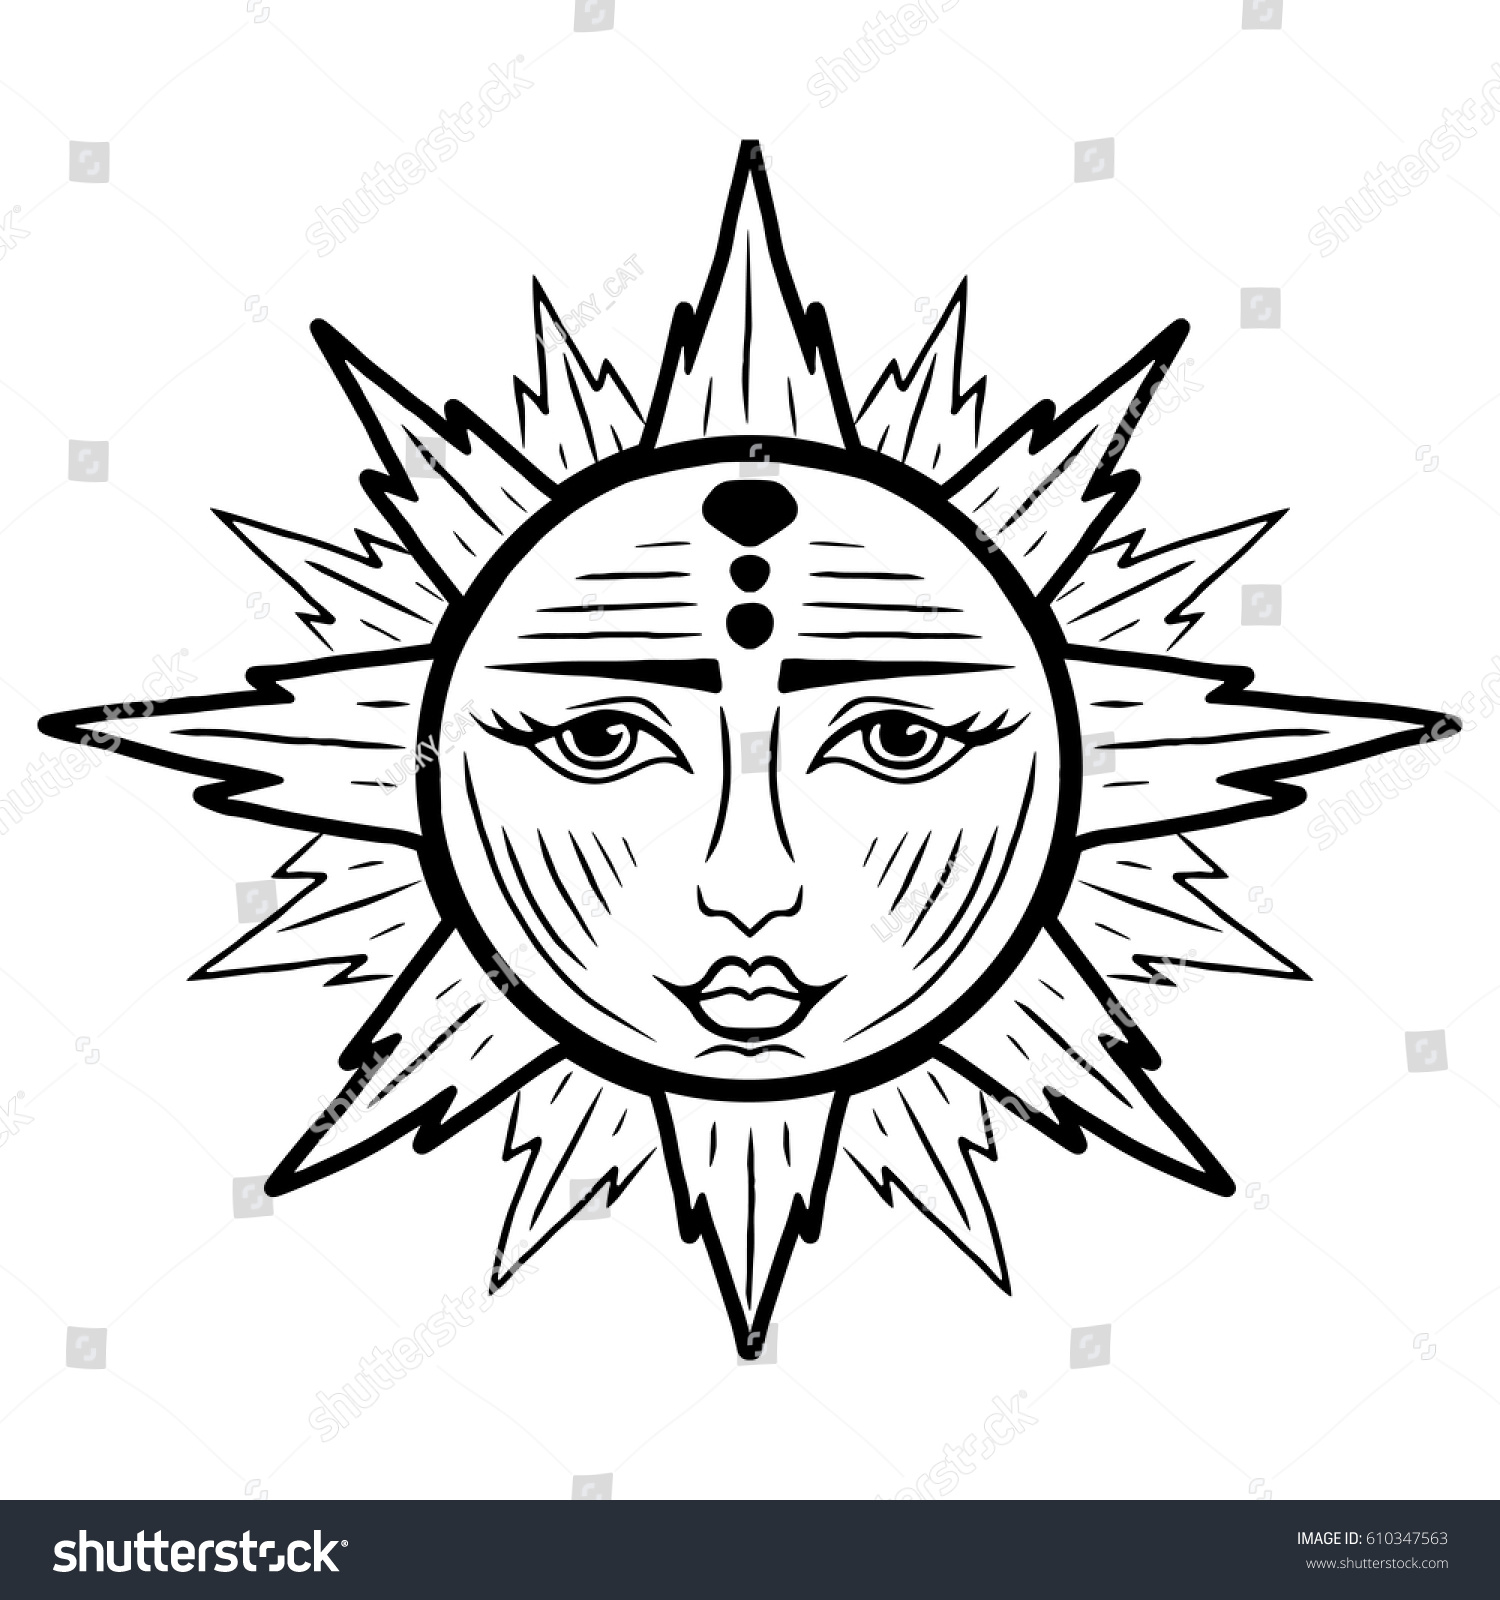 Illustration Nice Hand Drawn Sun Symbol Stock Vector (Royalty Free ...